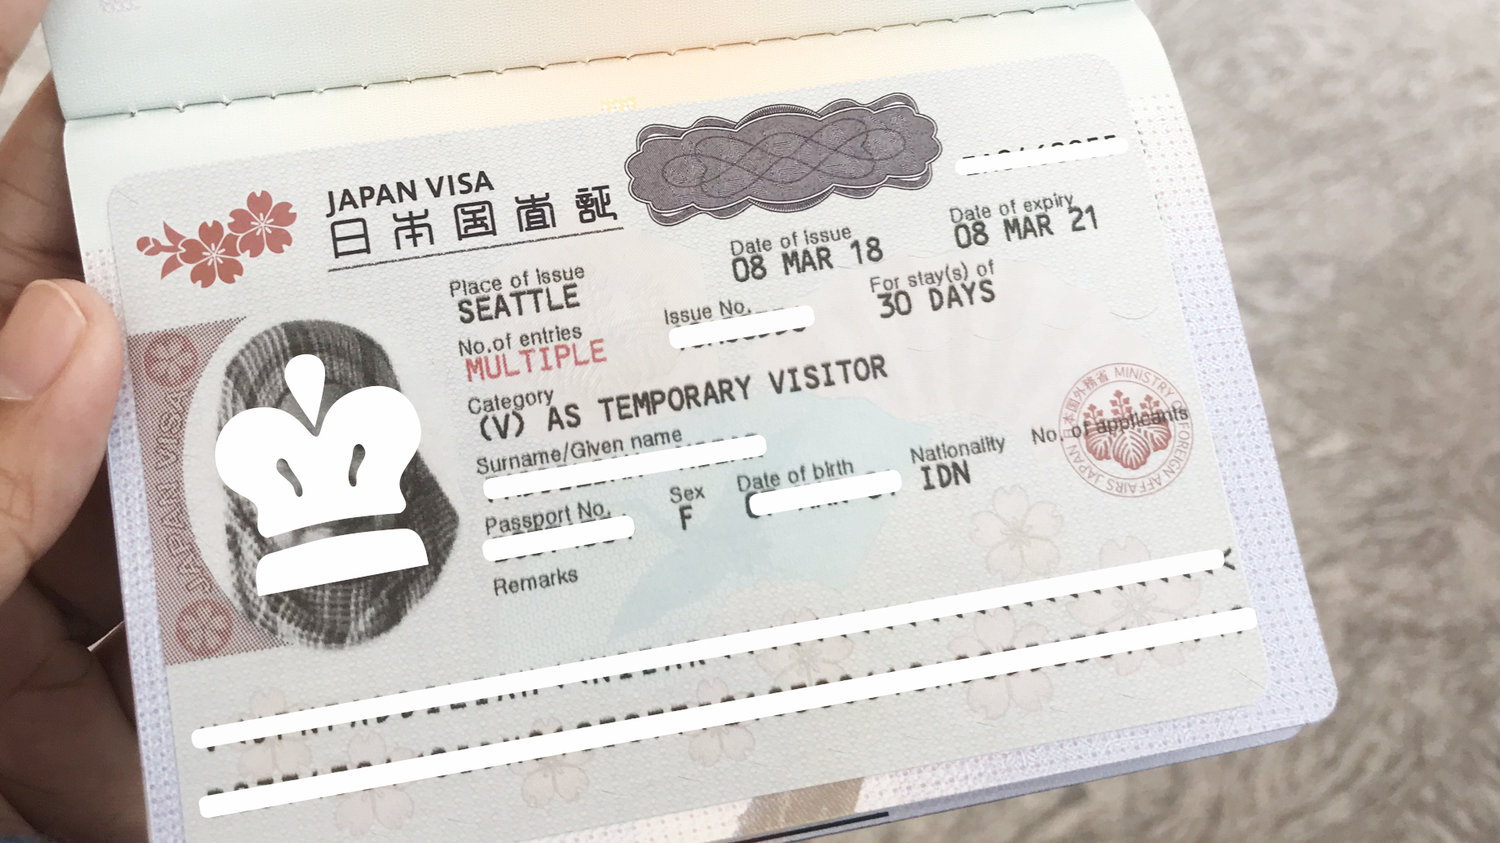 Entry visa. Japan visa. Виза в Японию. Japan multiple visa. Фото на визу в Японию.